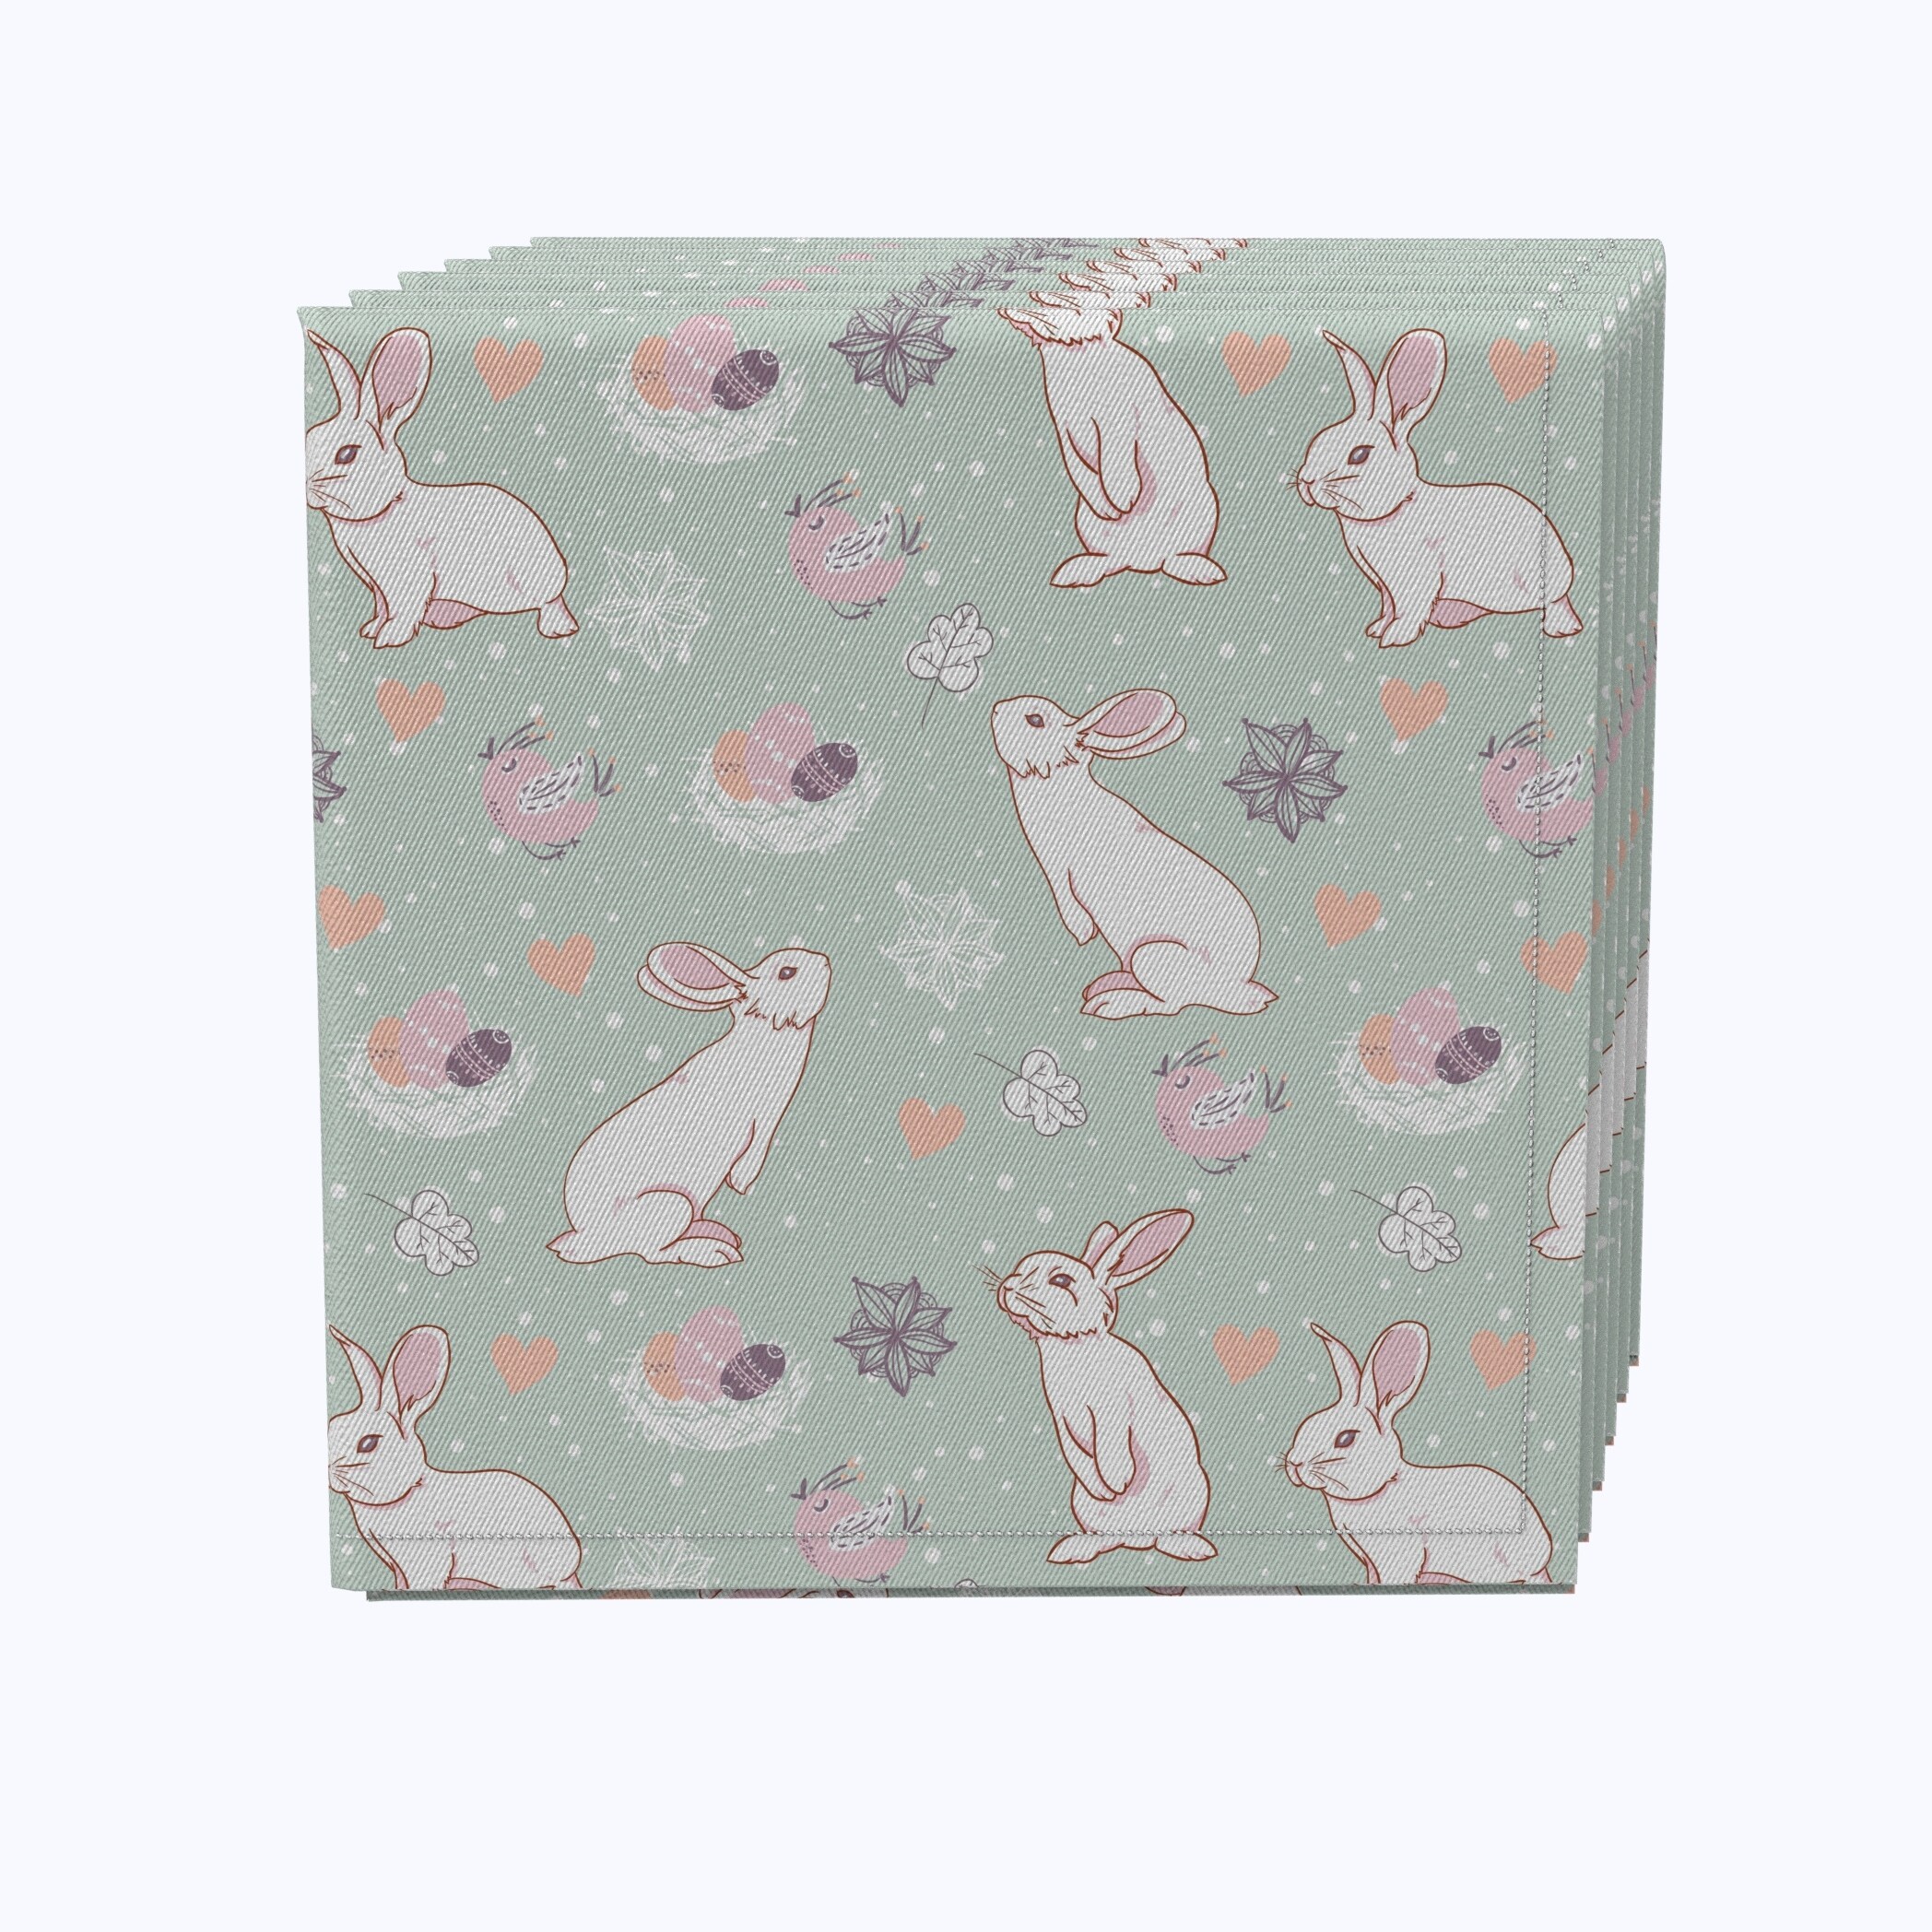 Fabric Textile Products, Inc. Napkin Set of 4, 100% Cotton, 20x20", Springtime Easter - 20 x 20